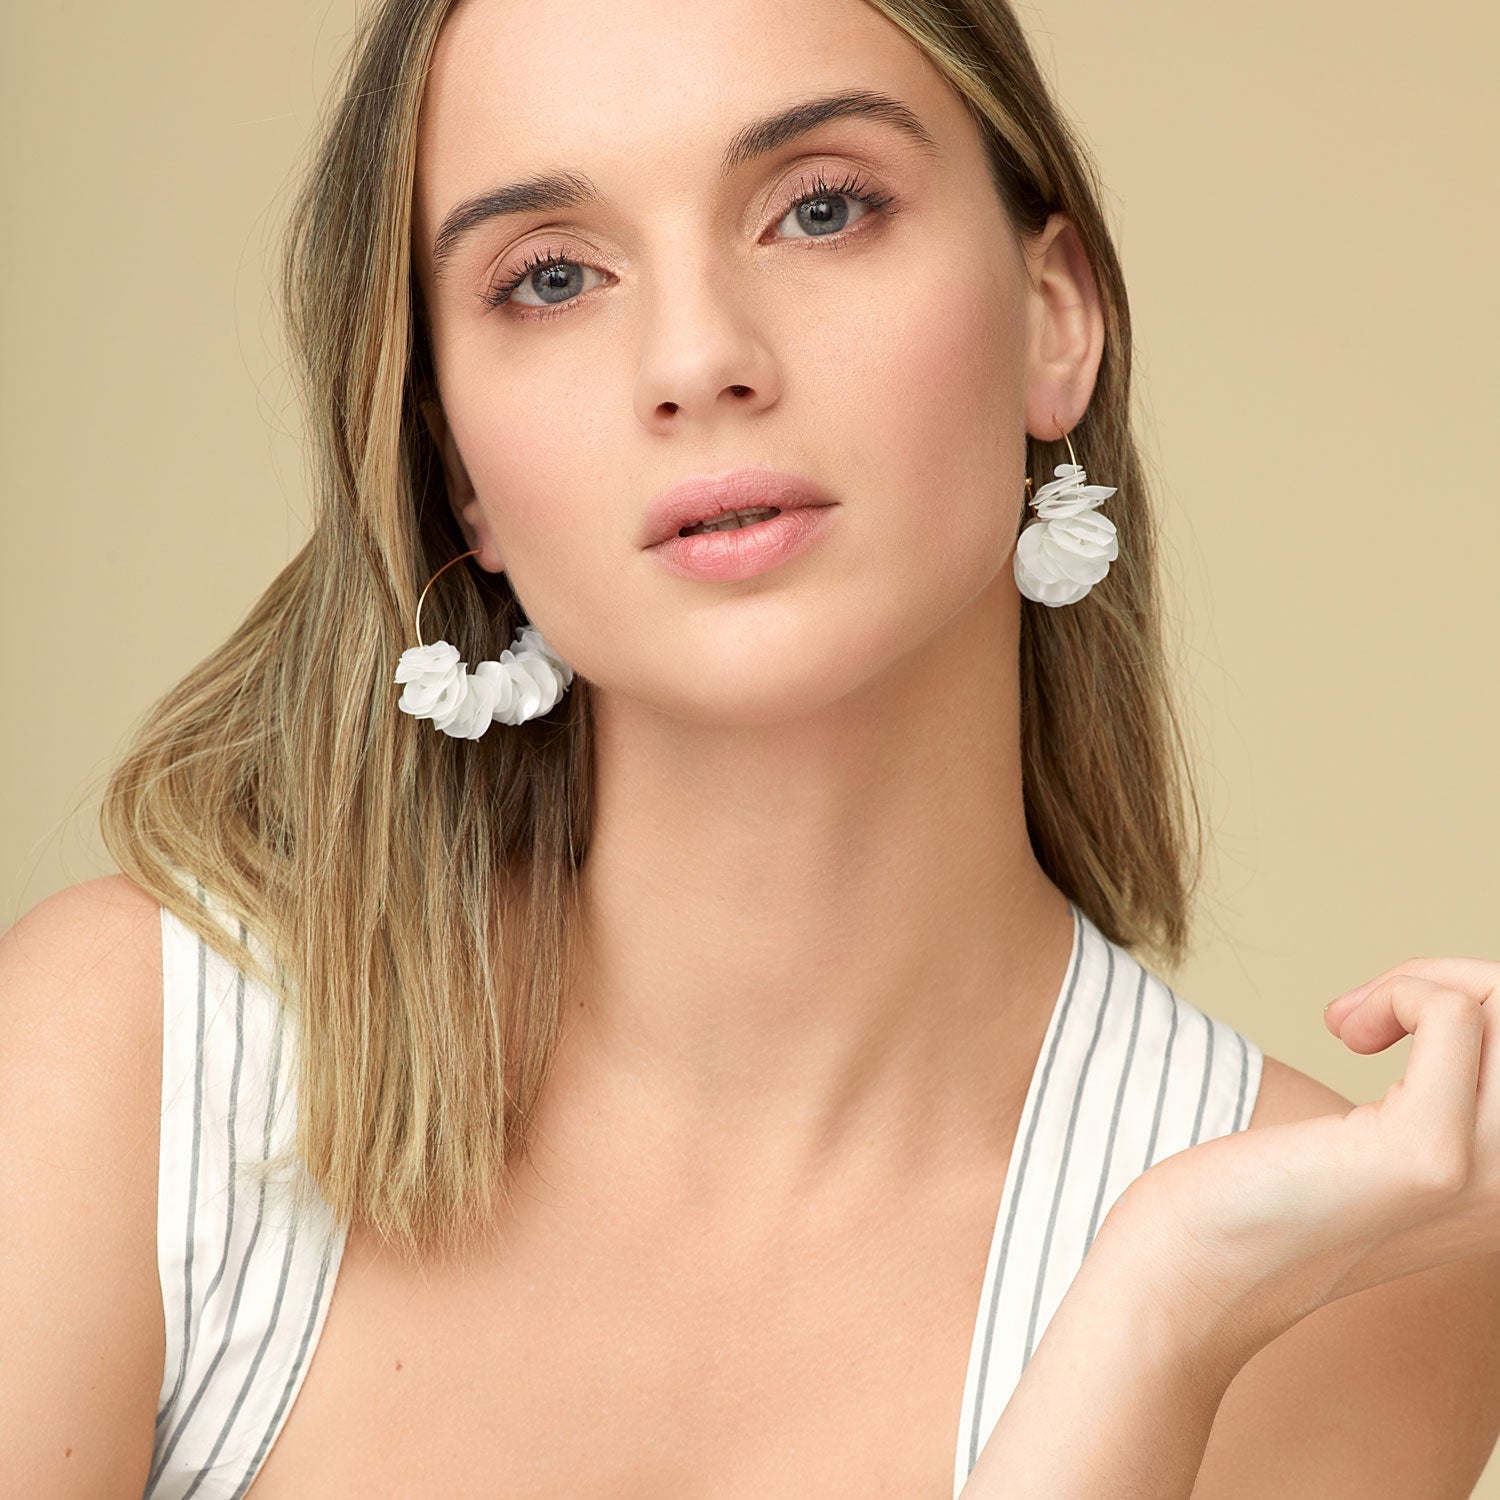 Mini Lolita Hoop Earrings White by Mignonne Gavigan